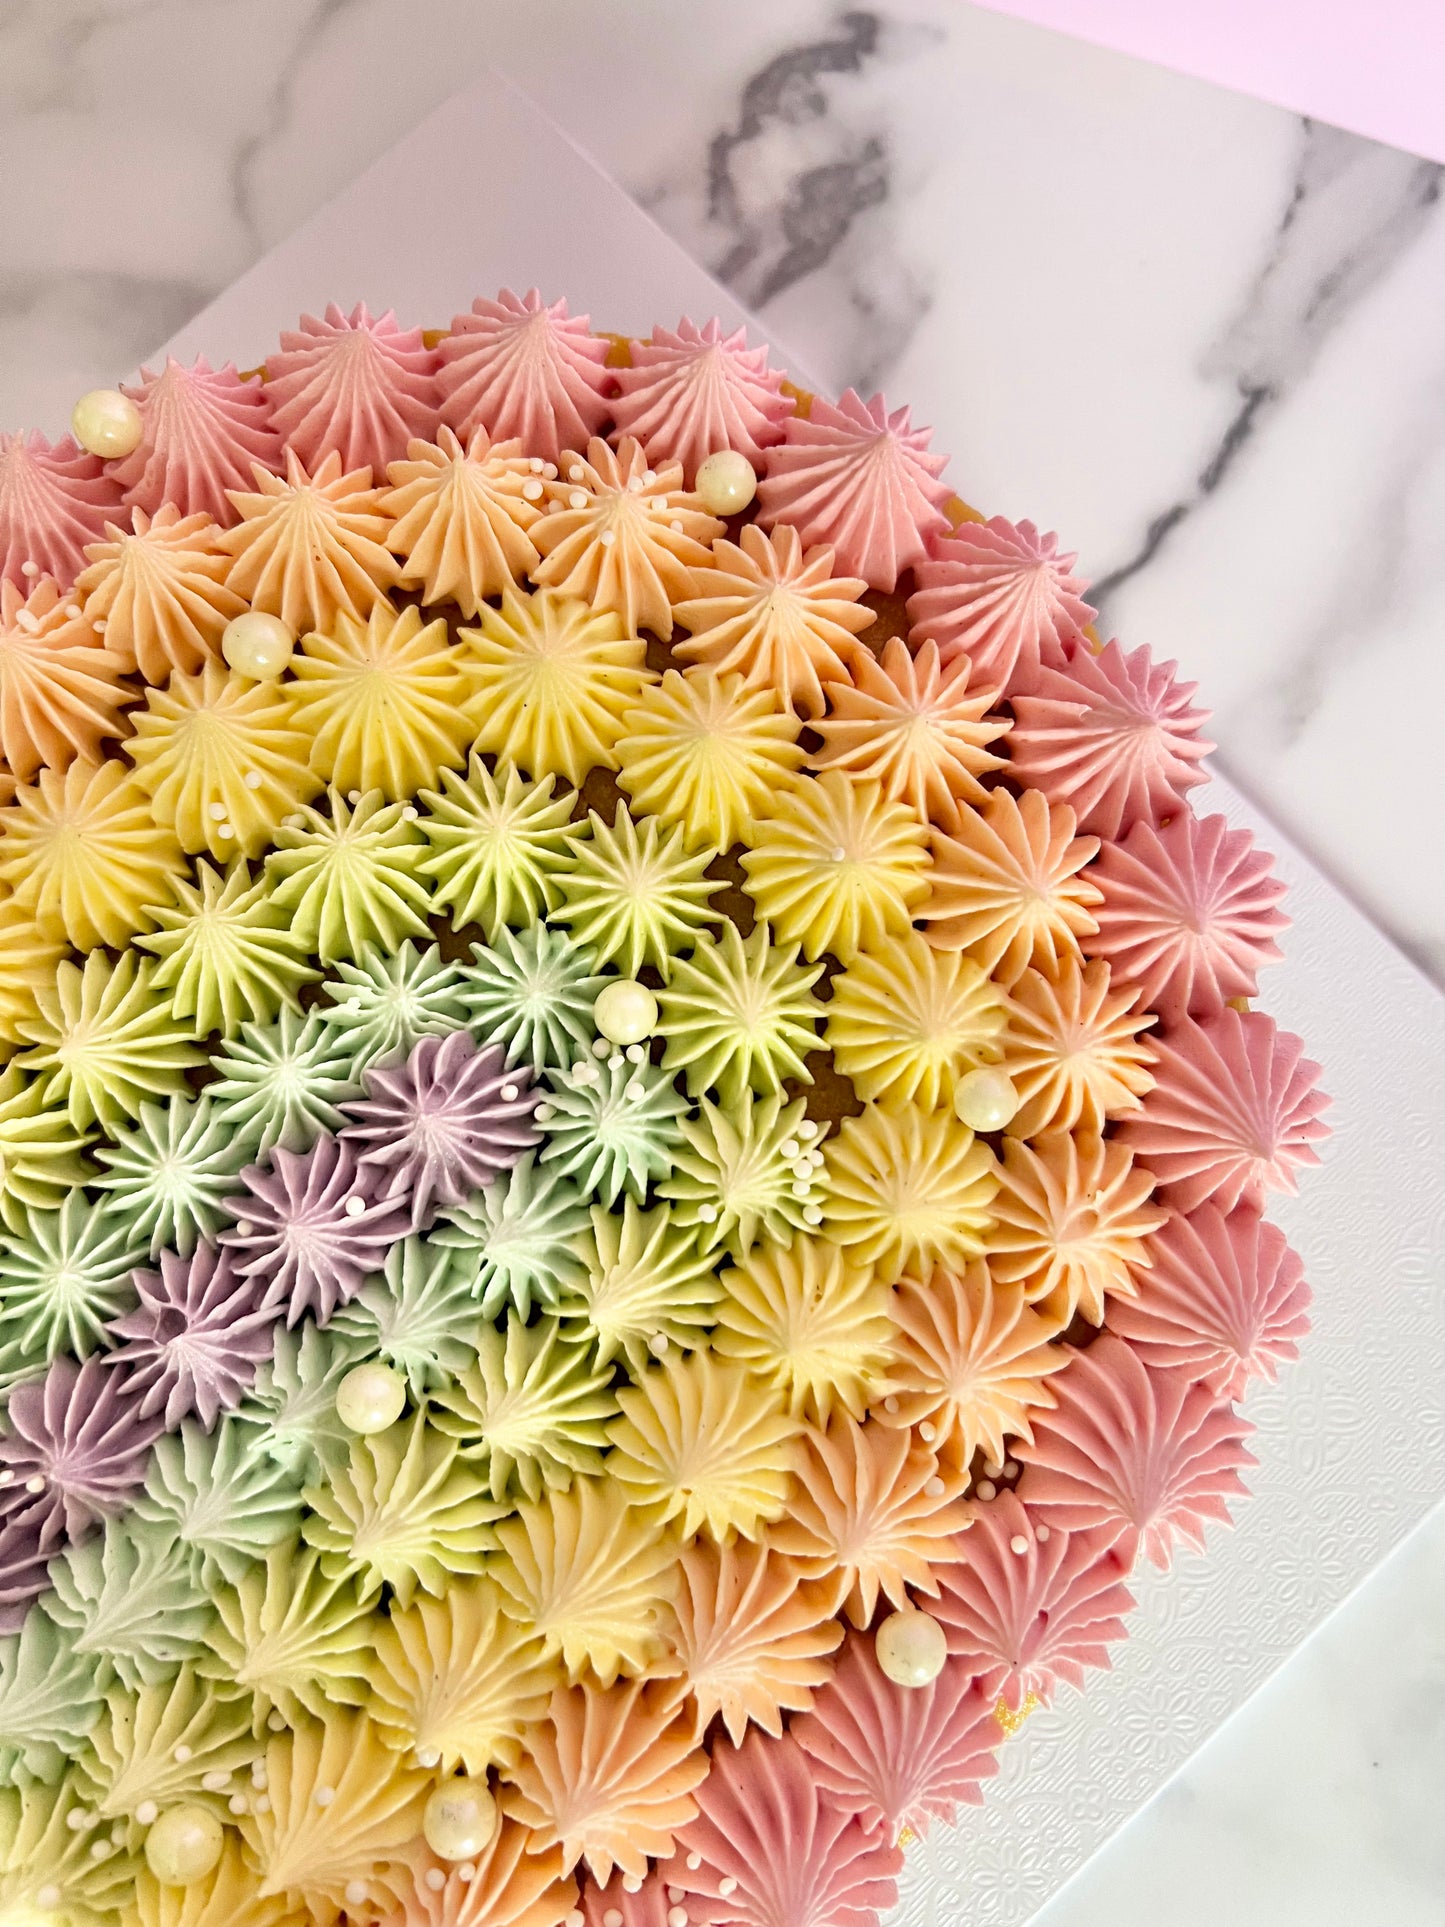 Rainbow Arch Cake